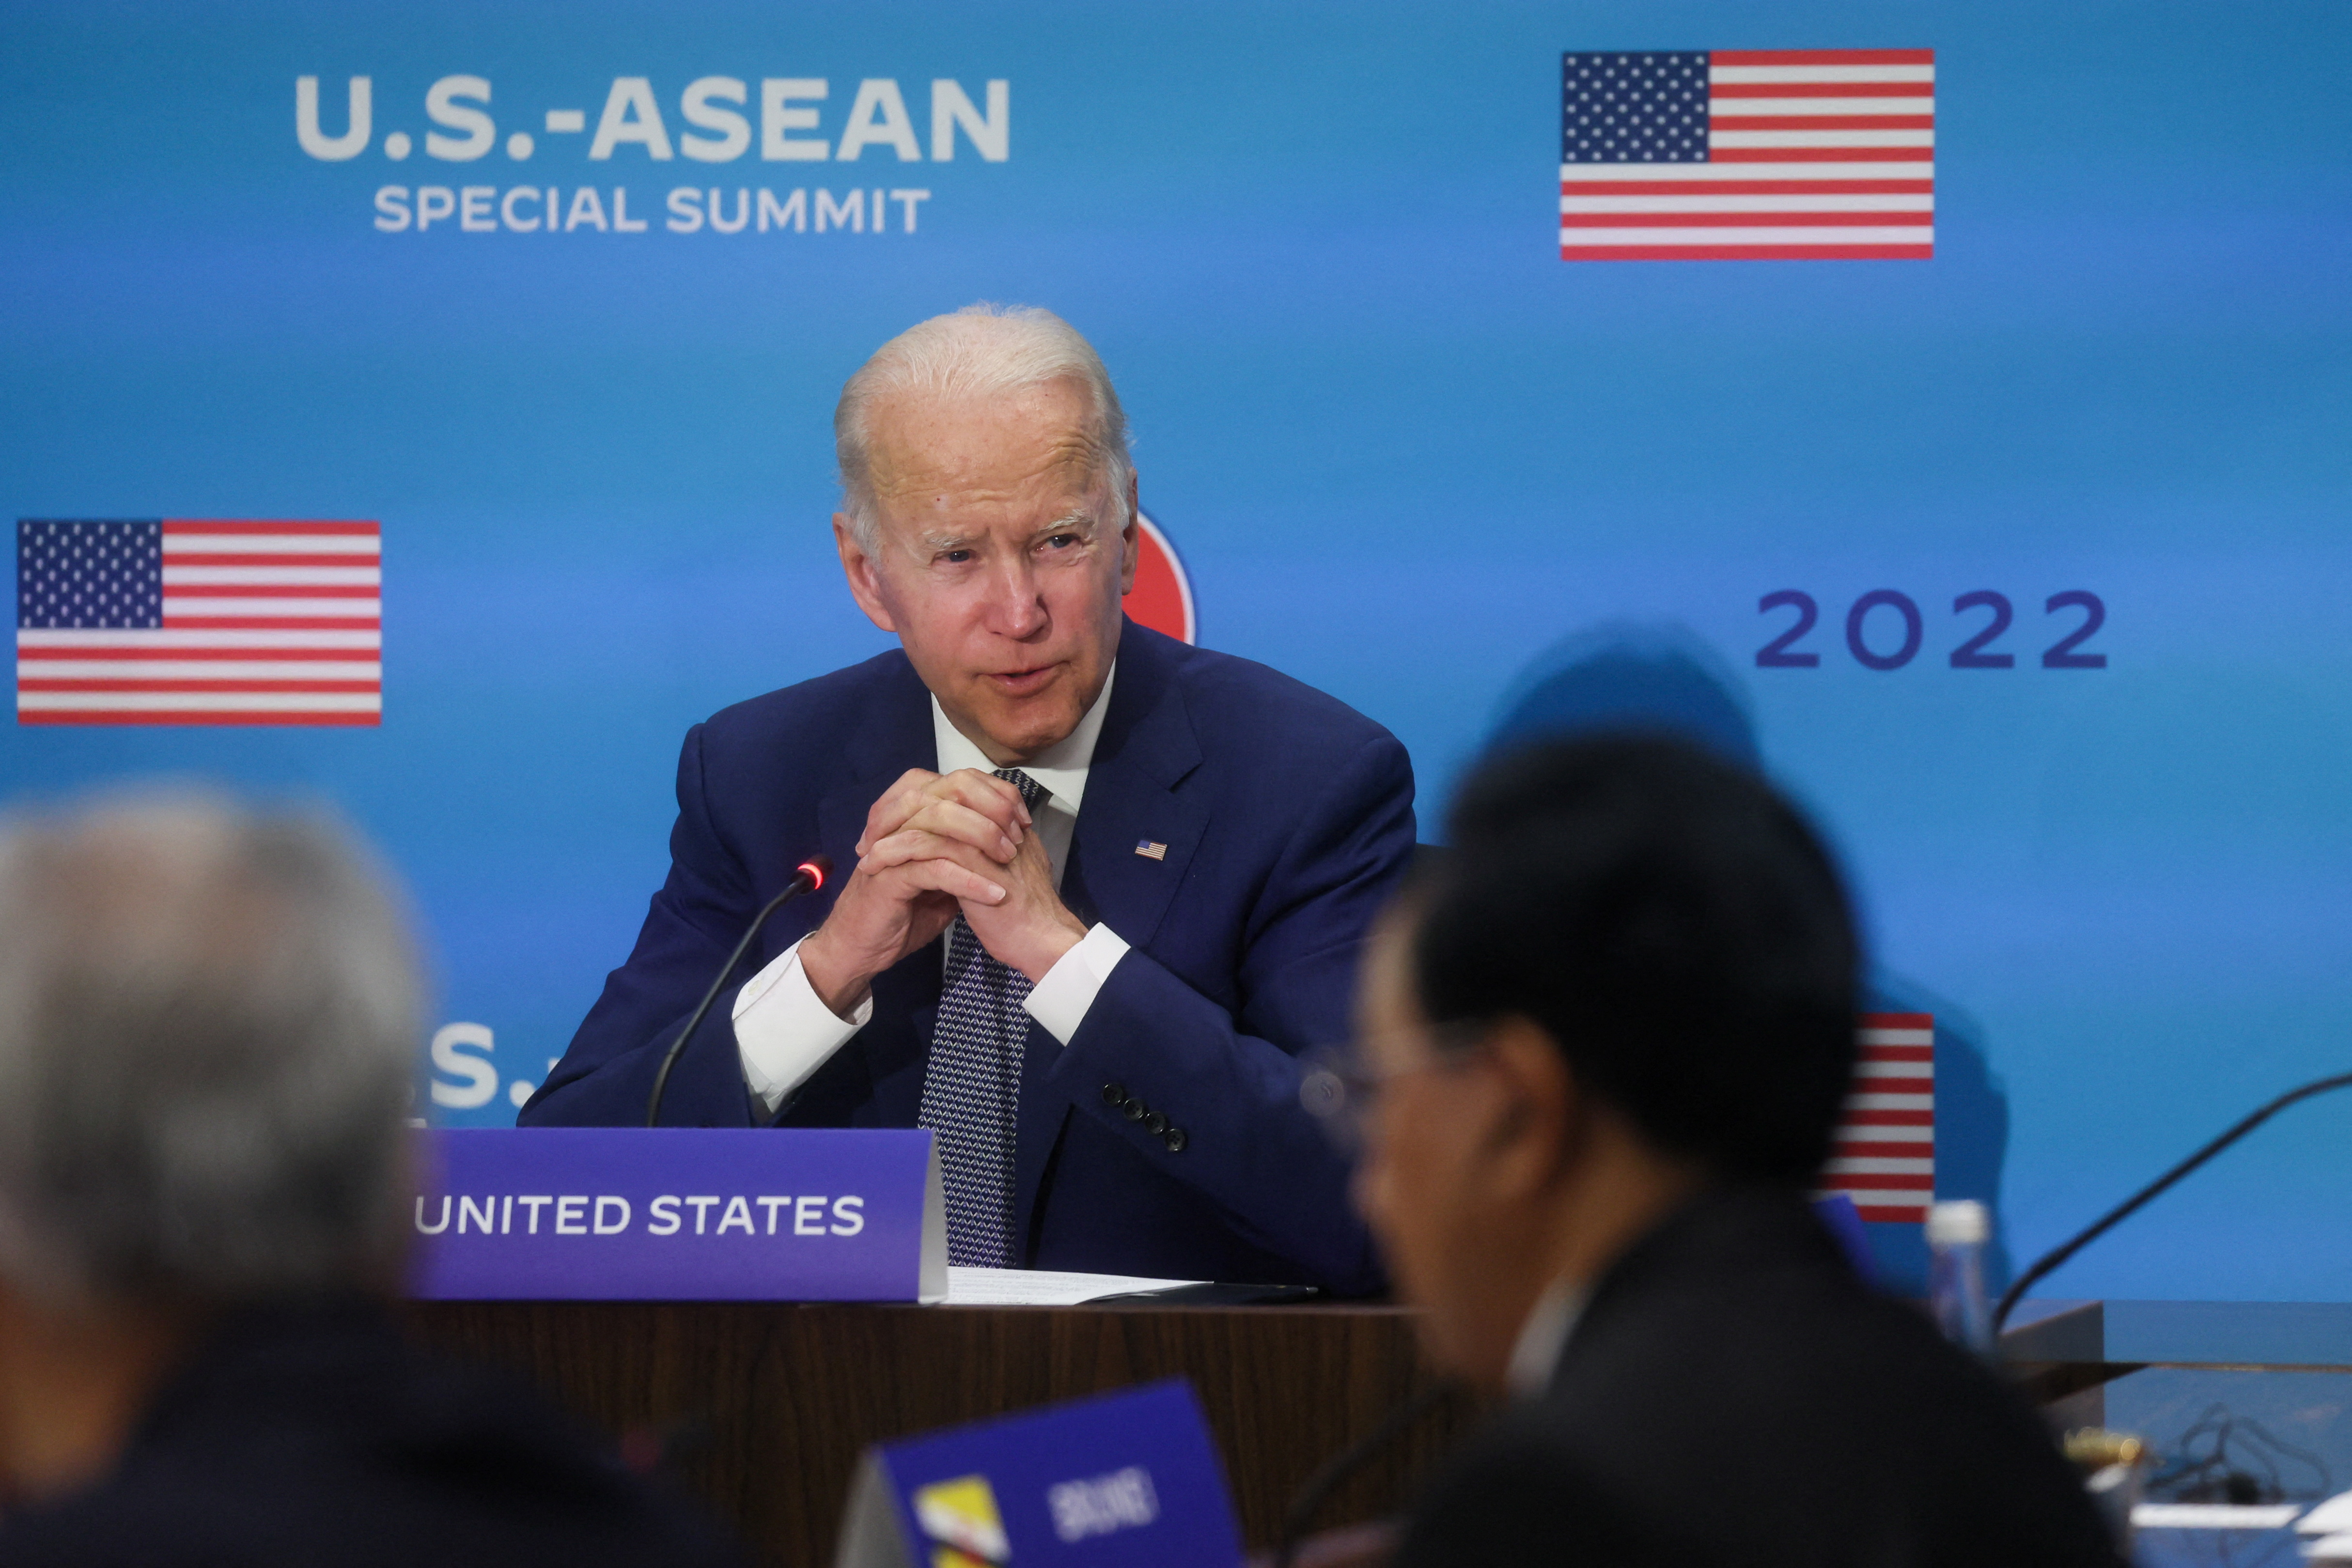 U.S. President Biden delivers remarks at the U.S.-ASEAN Special Summit, in Washington